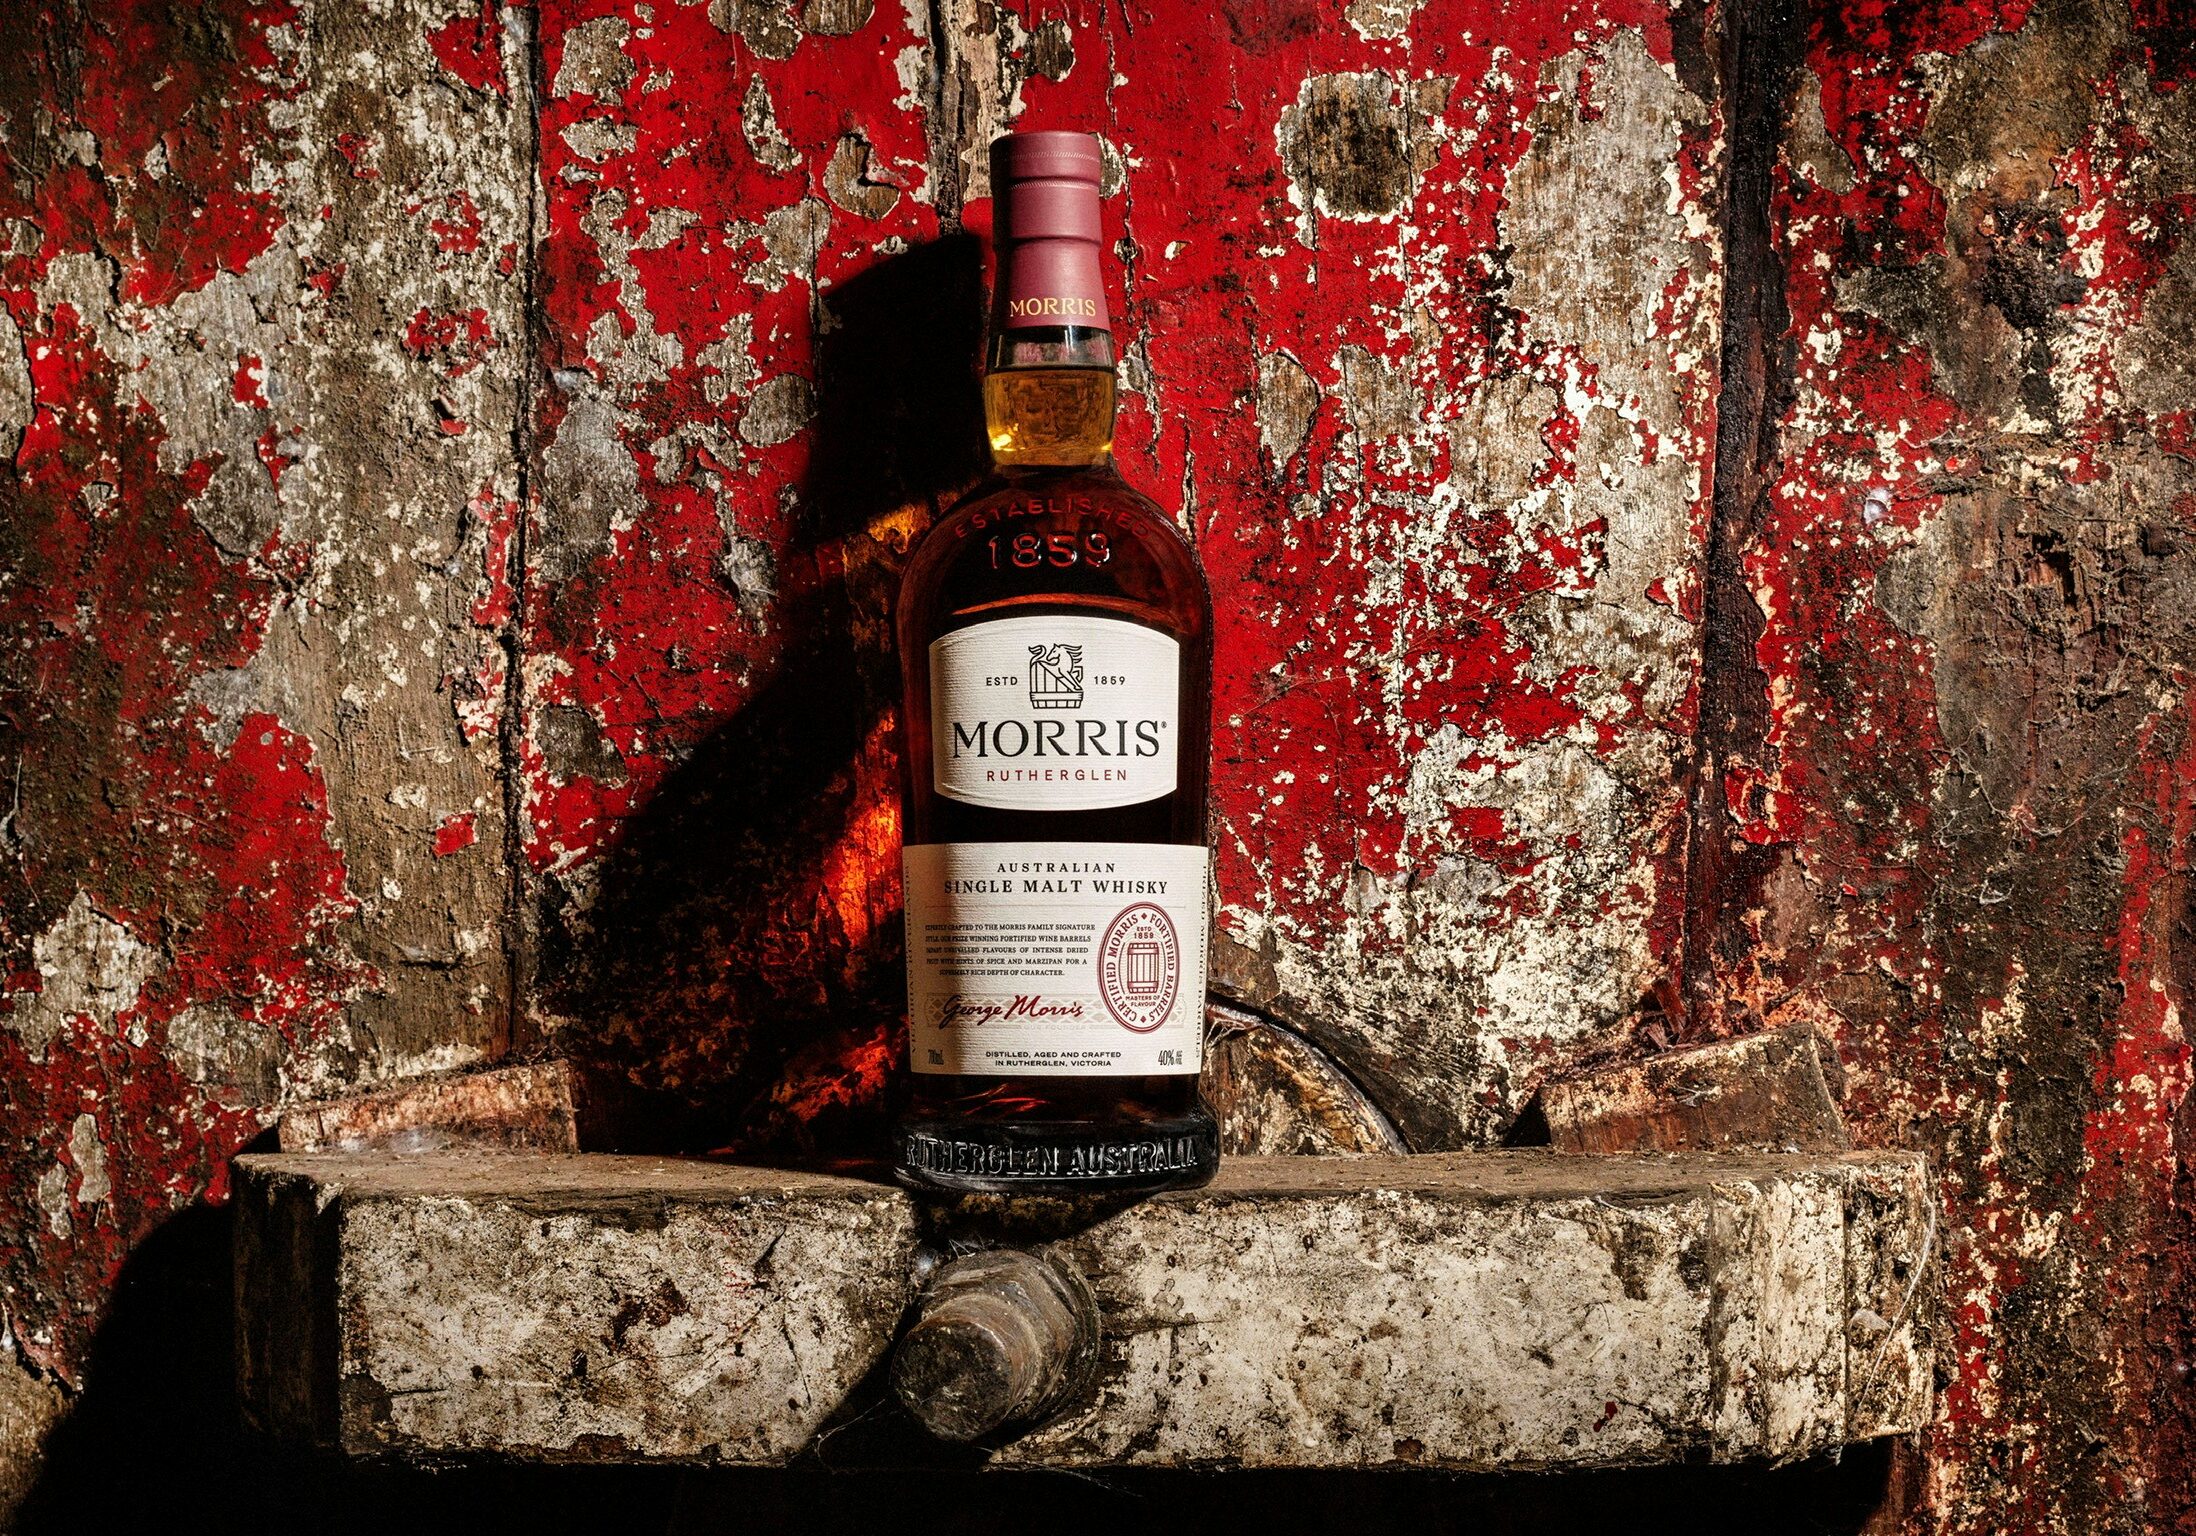 MORRIS whisky master launch image